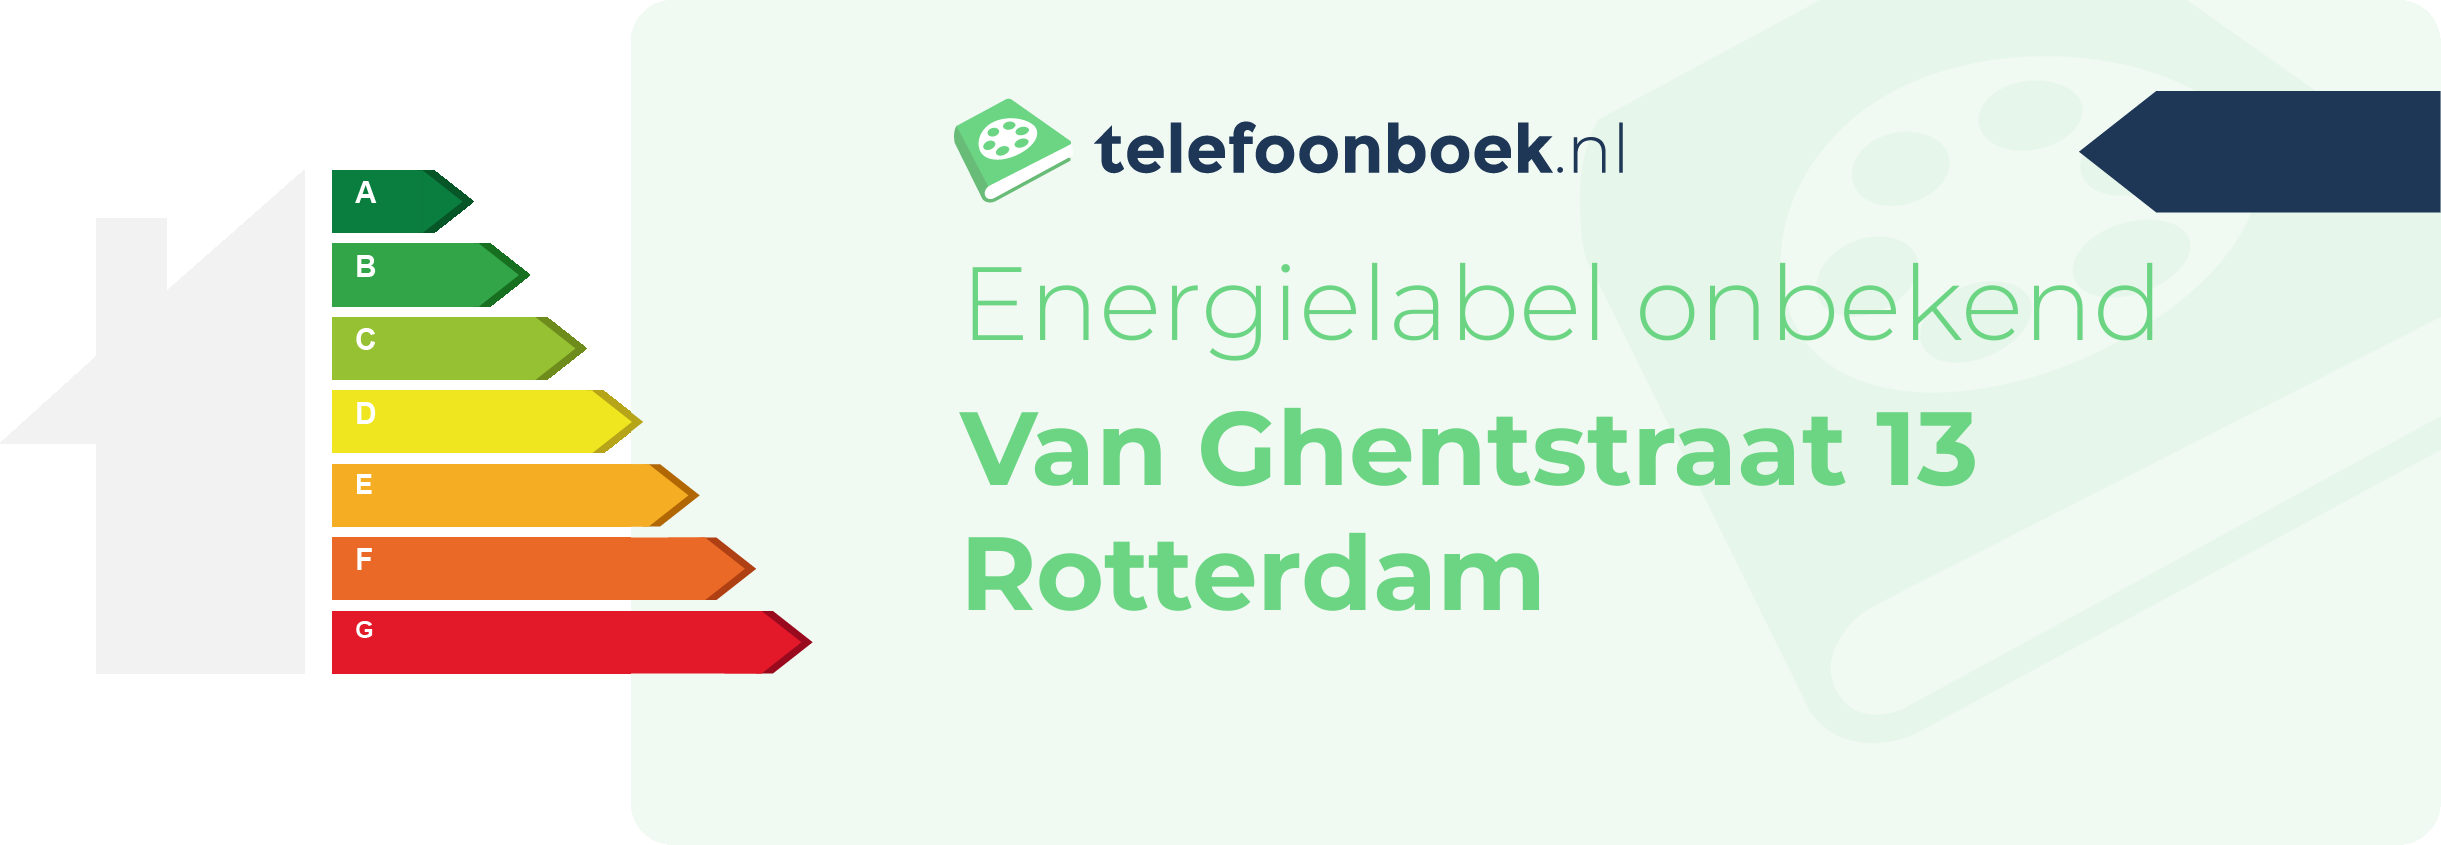 Energielabel Van Ghentstraat 13 Rotterdam